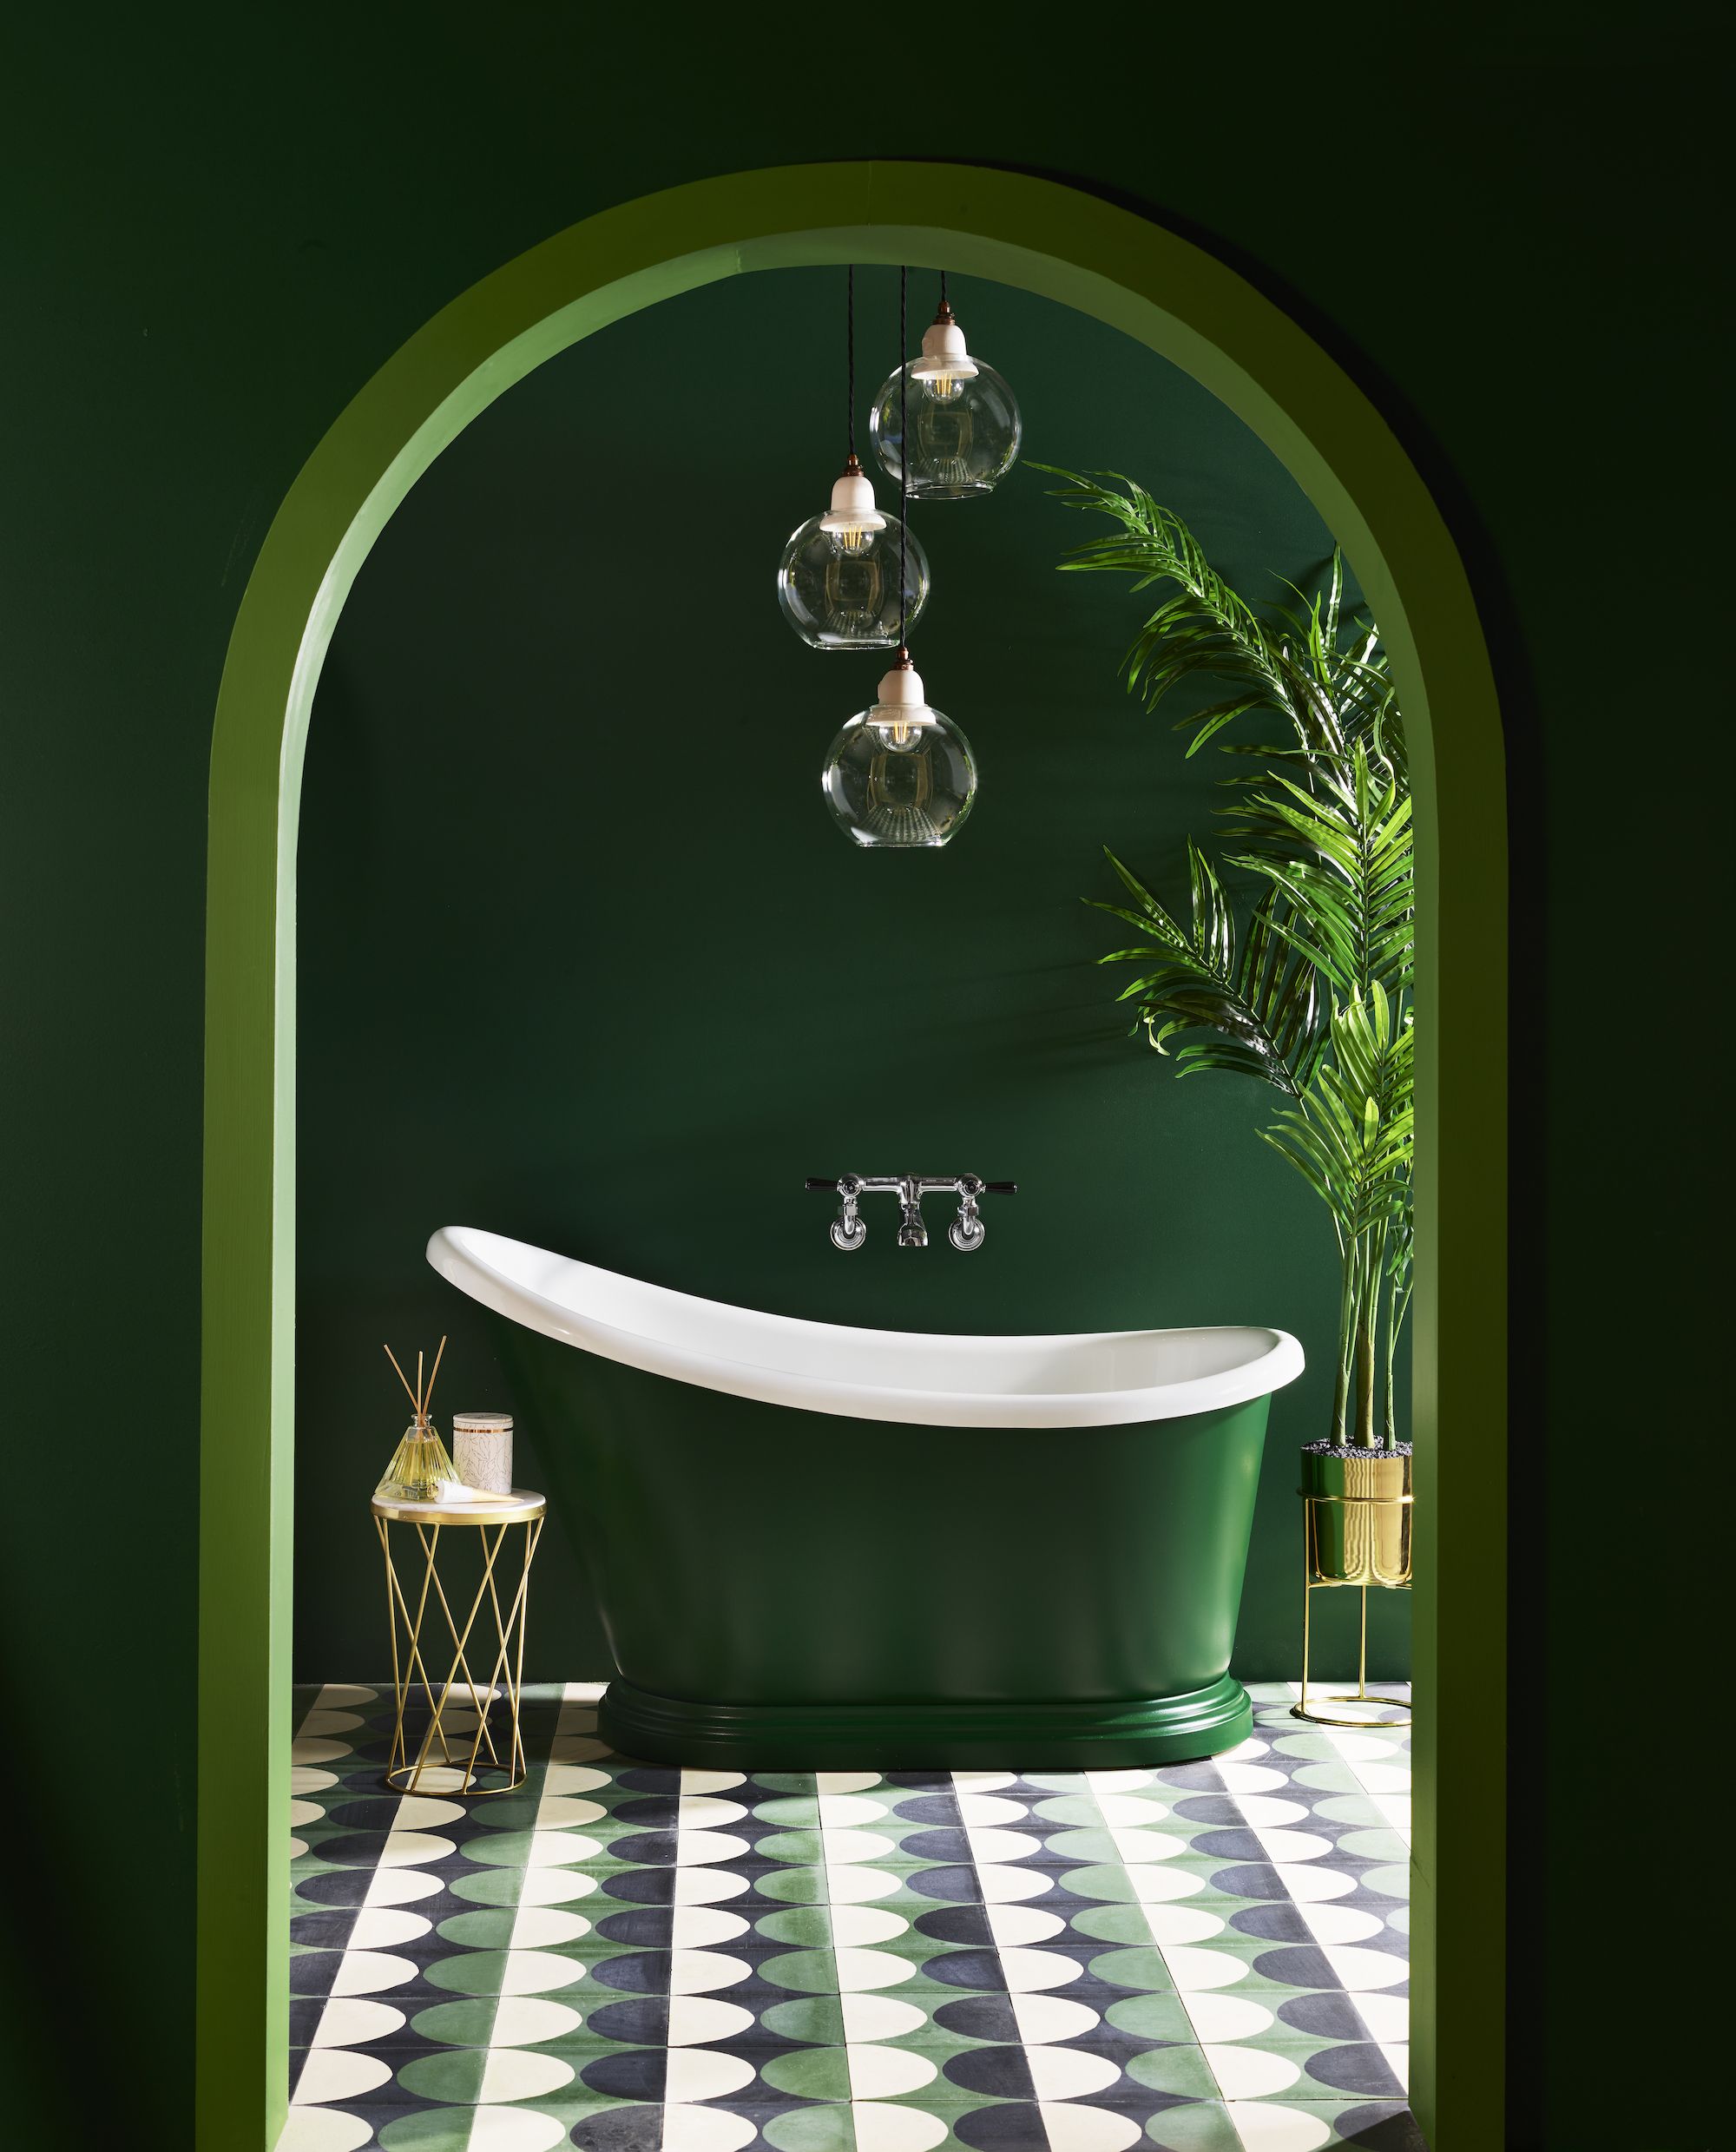 https://hips.hearstapps.com/hmg-prod/images/small-bathroom-ideas-bath-tub-green-64c1534c477d7.jpg